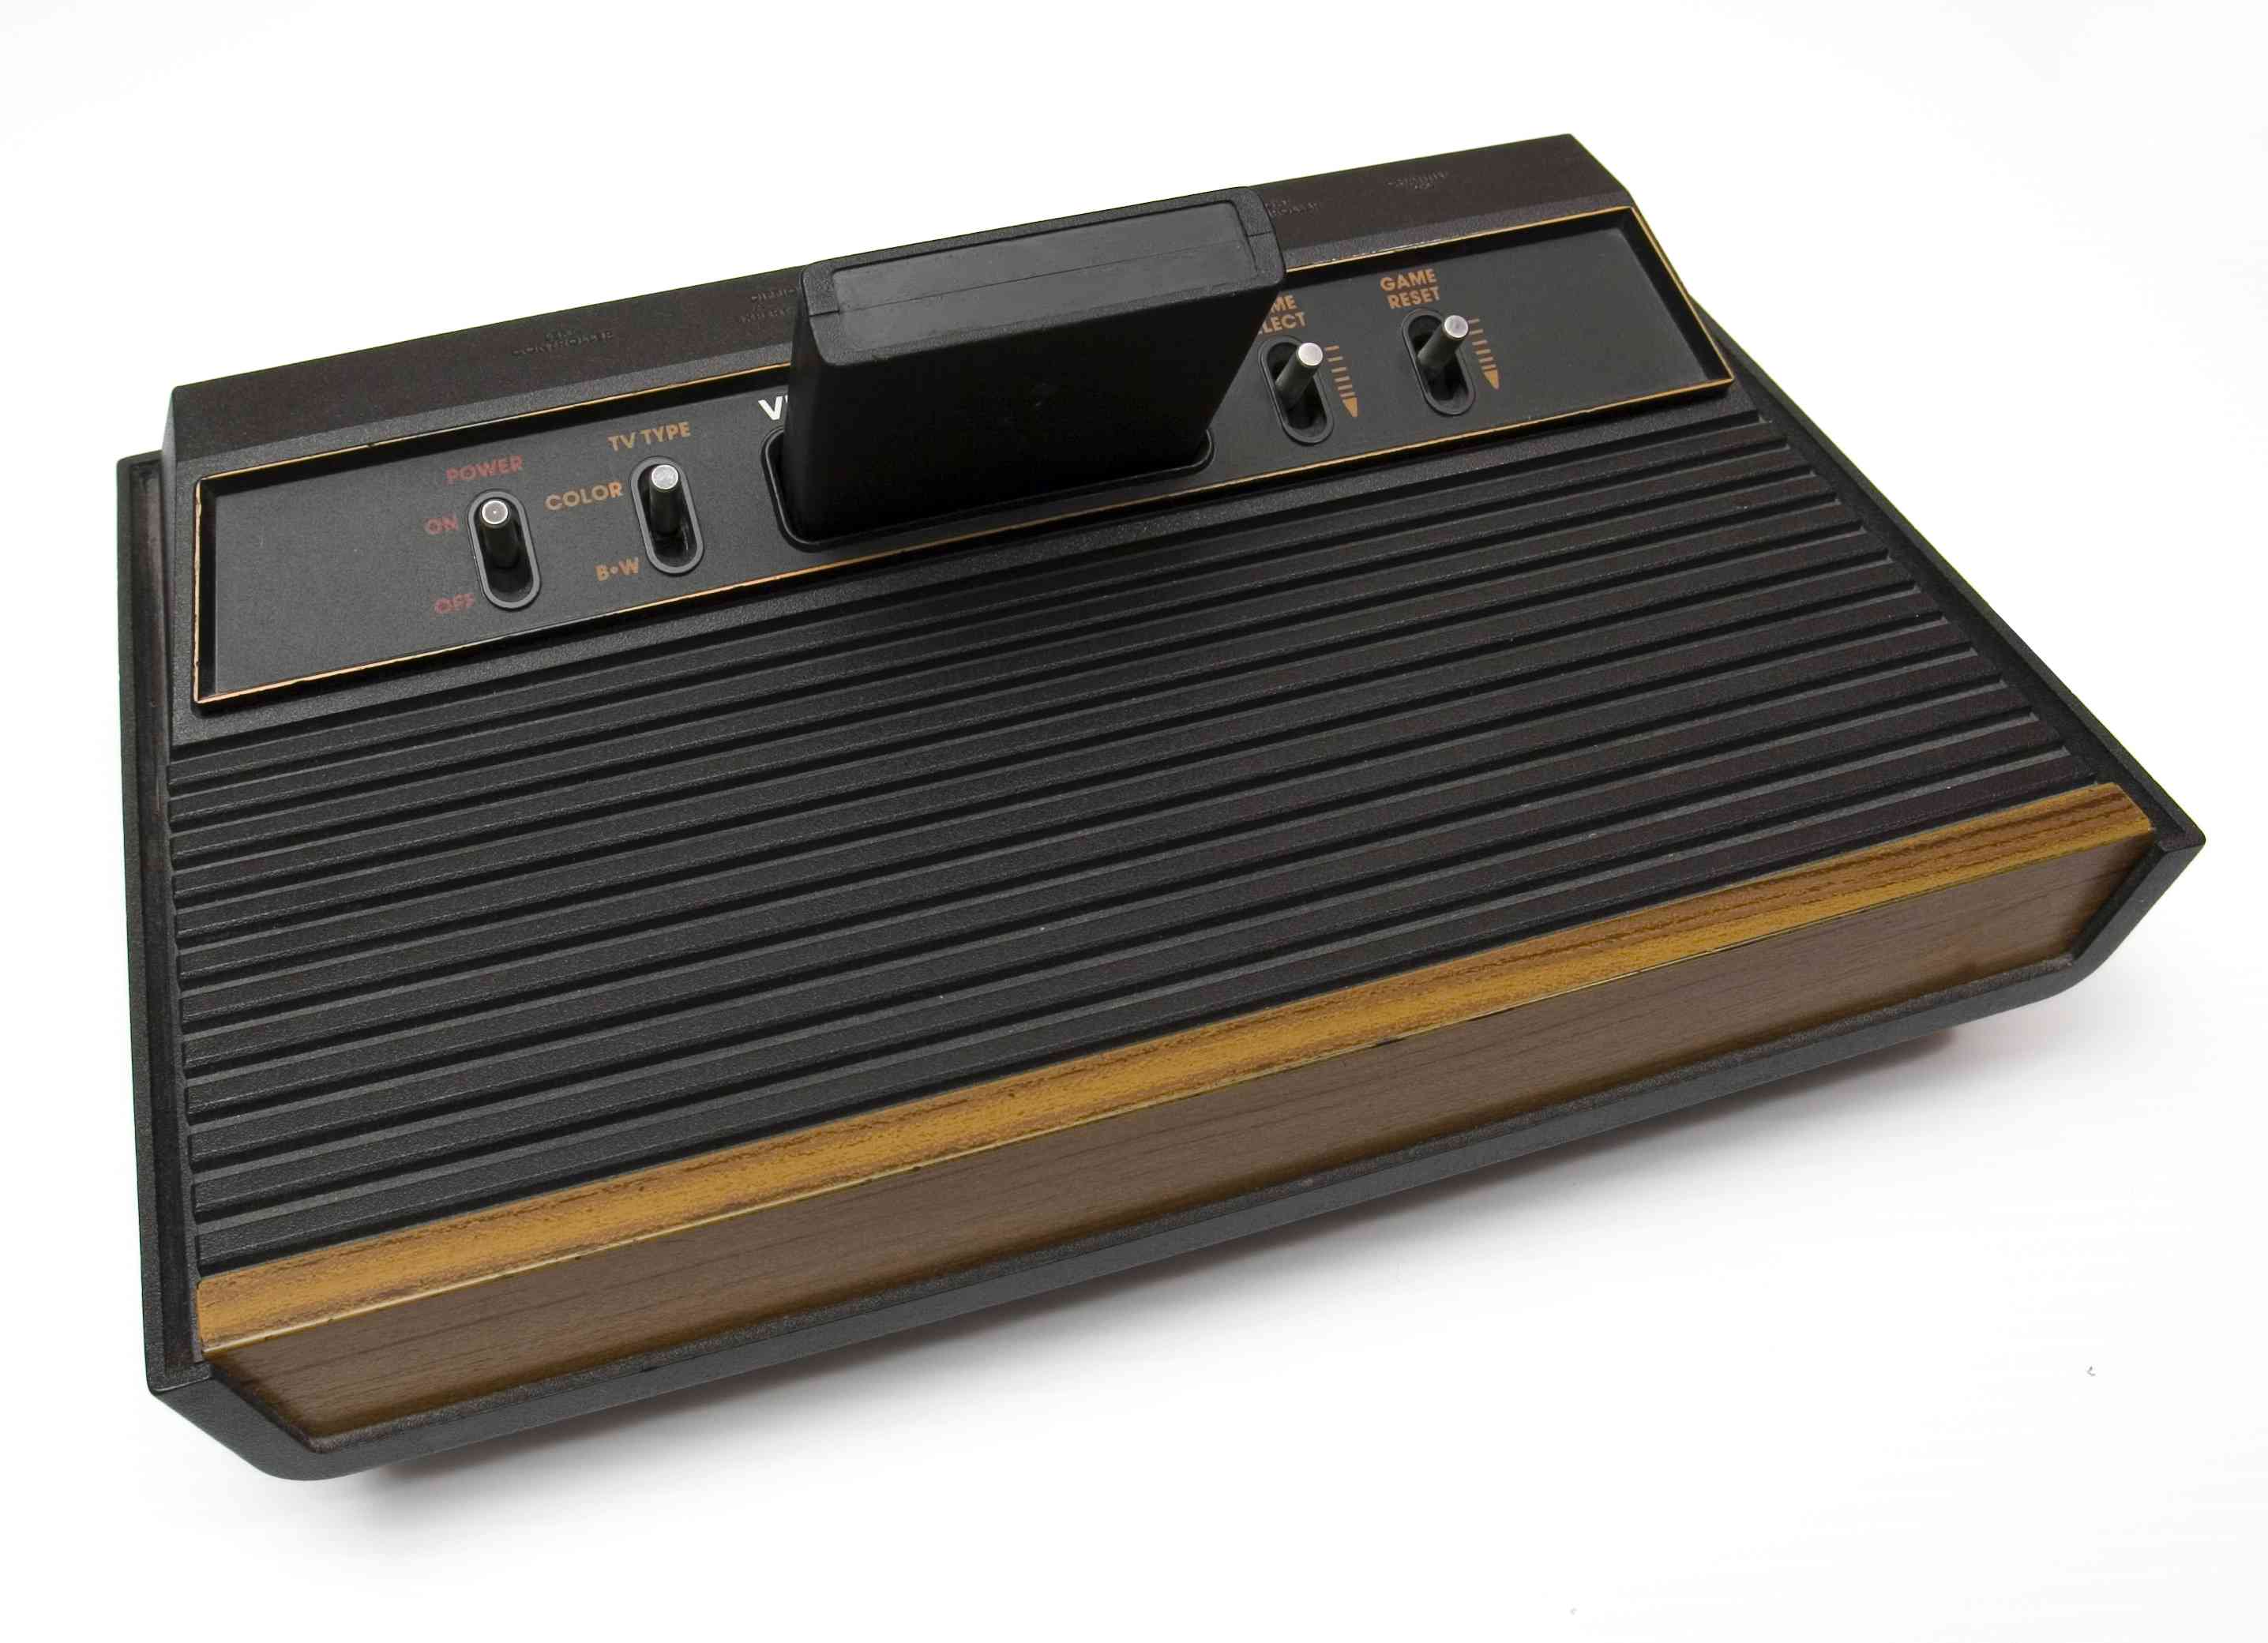 Een Atari Game-systeem.